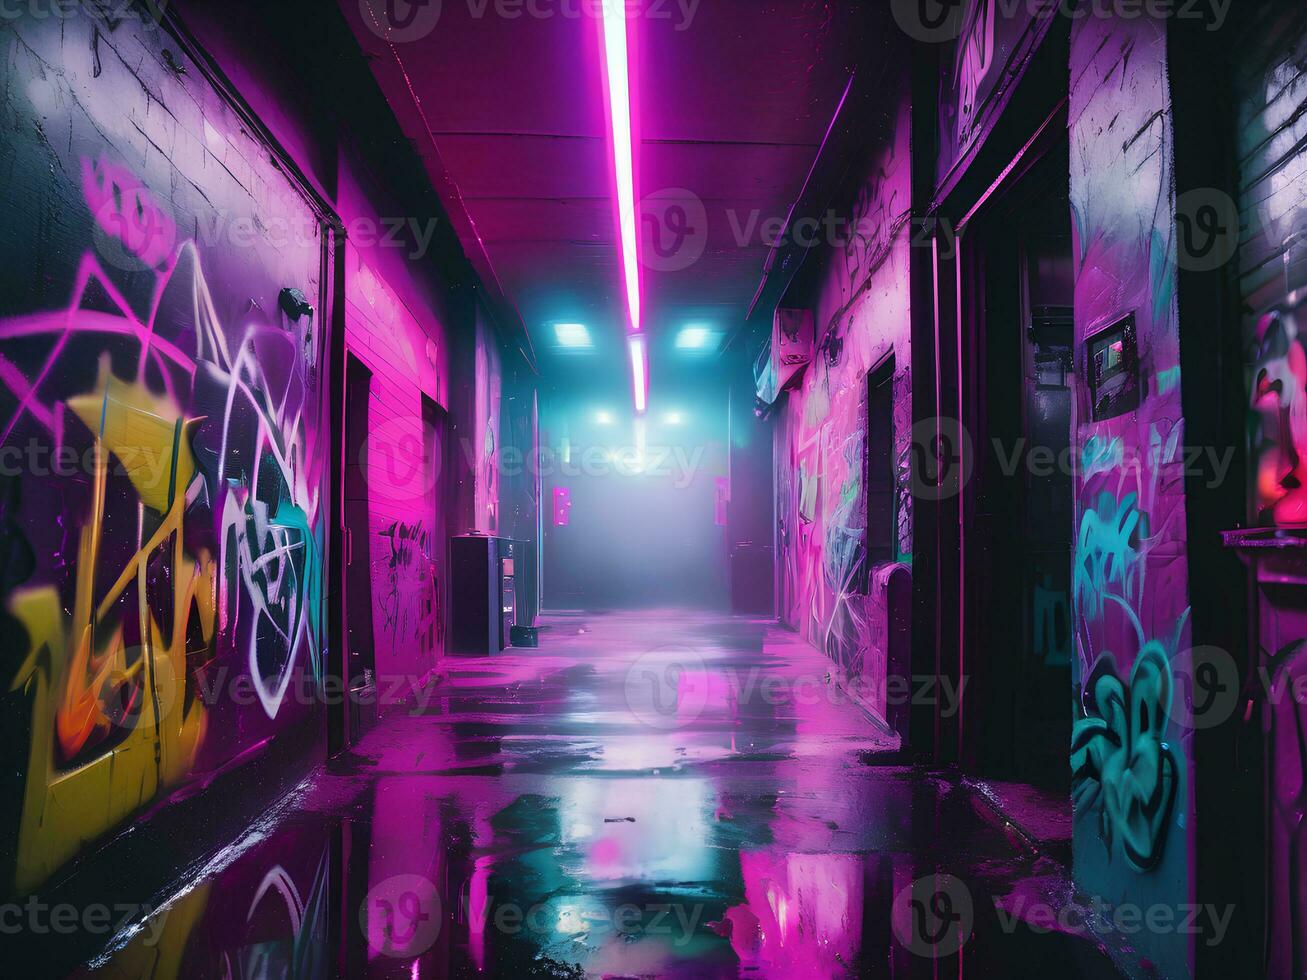 Cyberpunk style street with neon lights and graffiti photo - Dark vaporwave